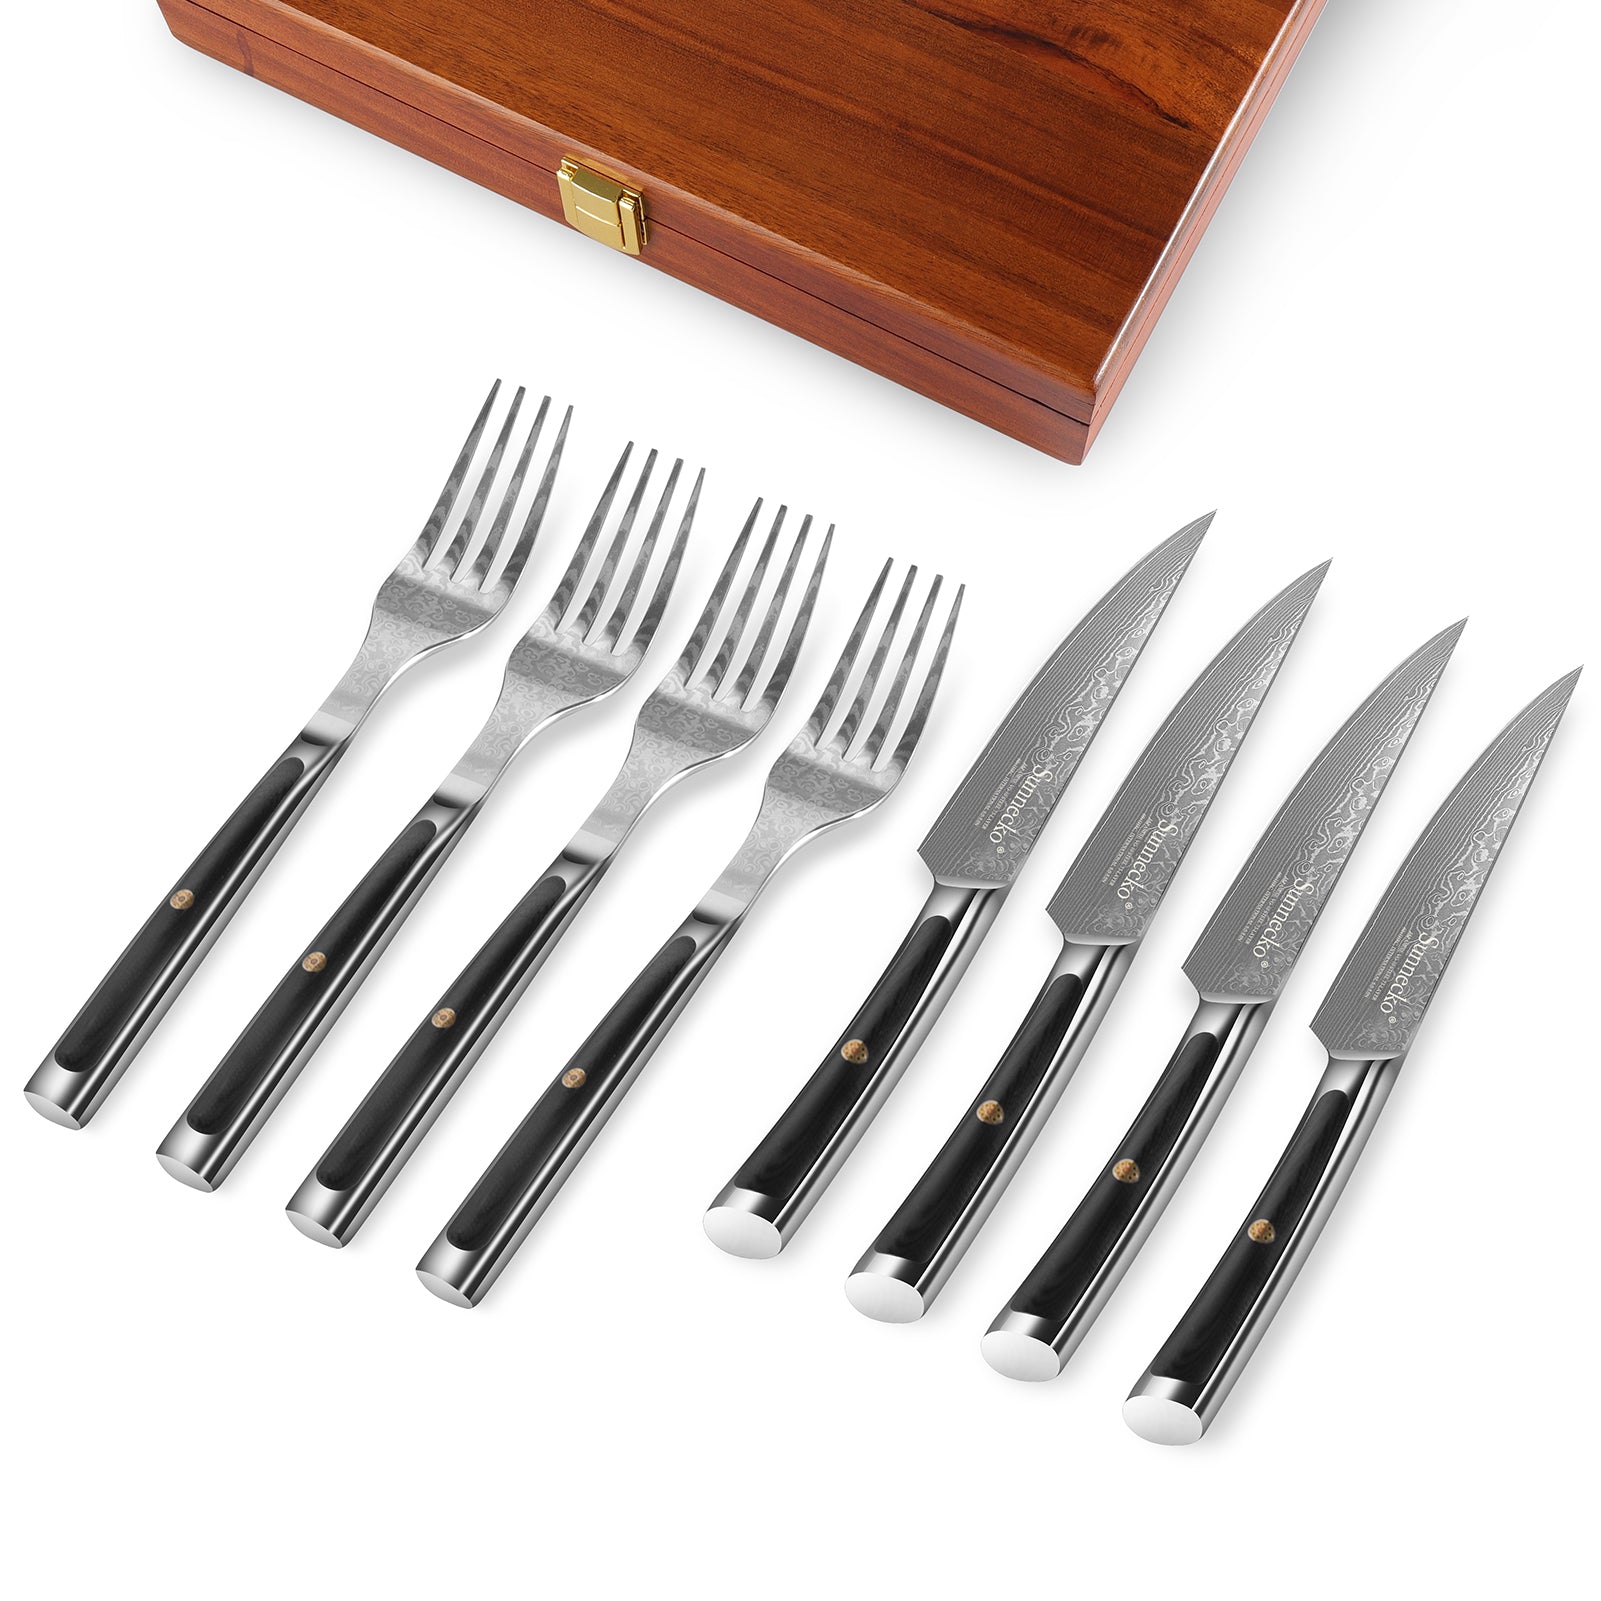  WILDMOK Steak Knives, 5 inch Non Serrated Steak Knife Set of 4,  Japanese Damascus VG10 Steel Steak Knives,Premium Steak Knives Set with  Gift Box: Home & Kitchen